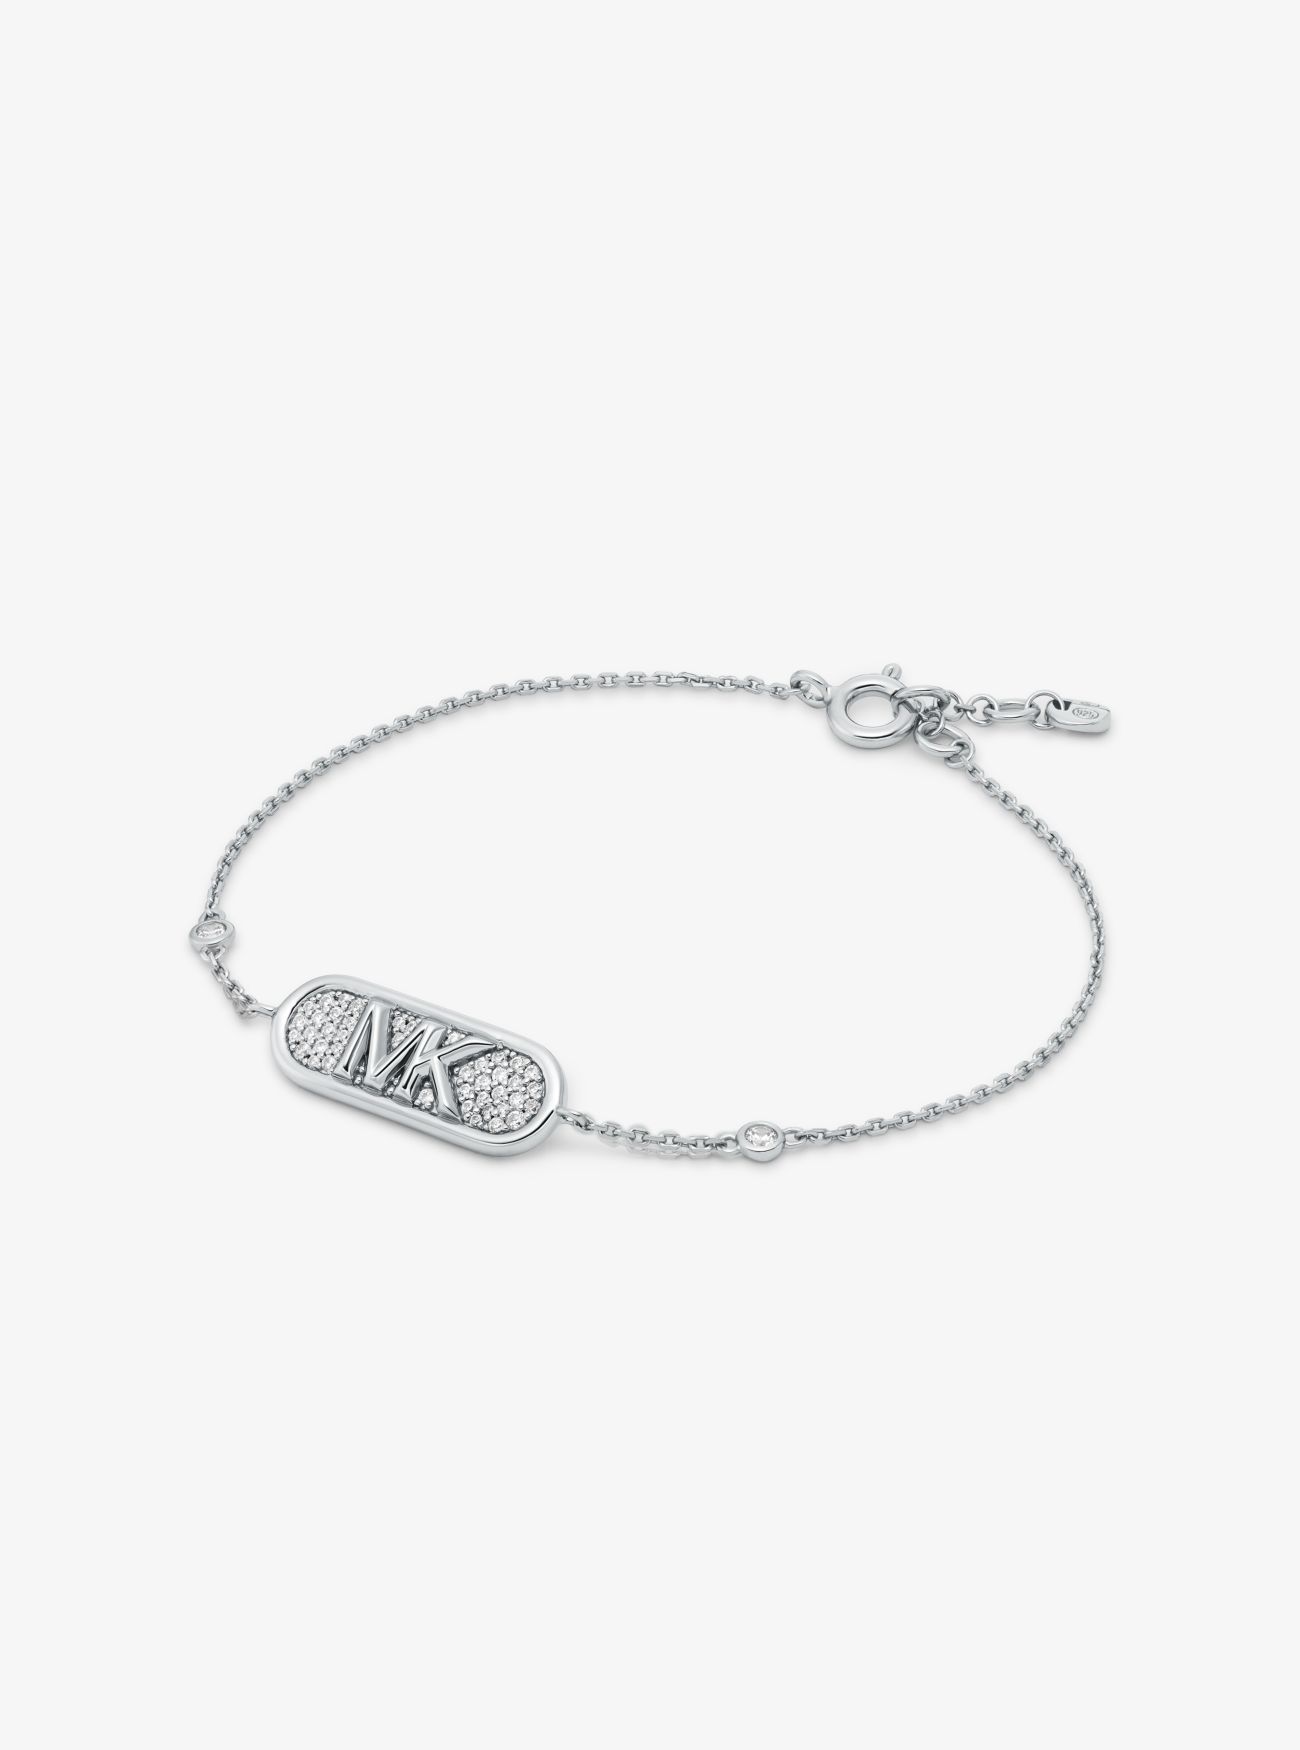 MK PavÃ© Precious Metal-Plated and Sterling Silver Empire Logo Bracelet - Silver - Michael Kors